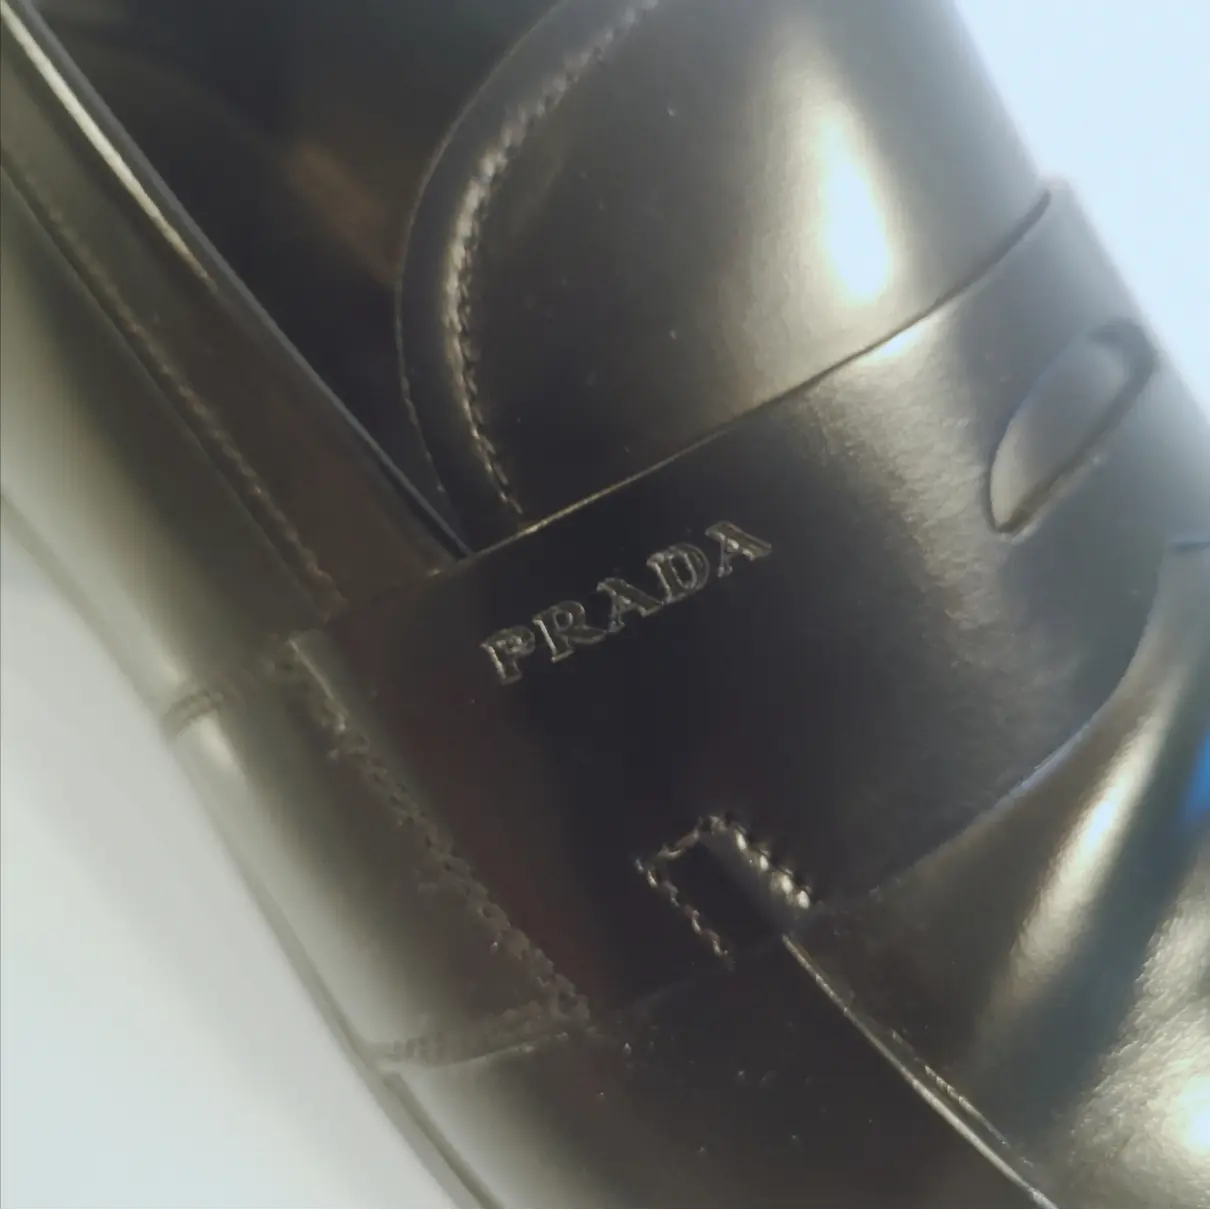 Leather flats Prada